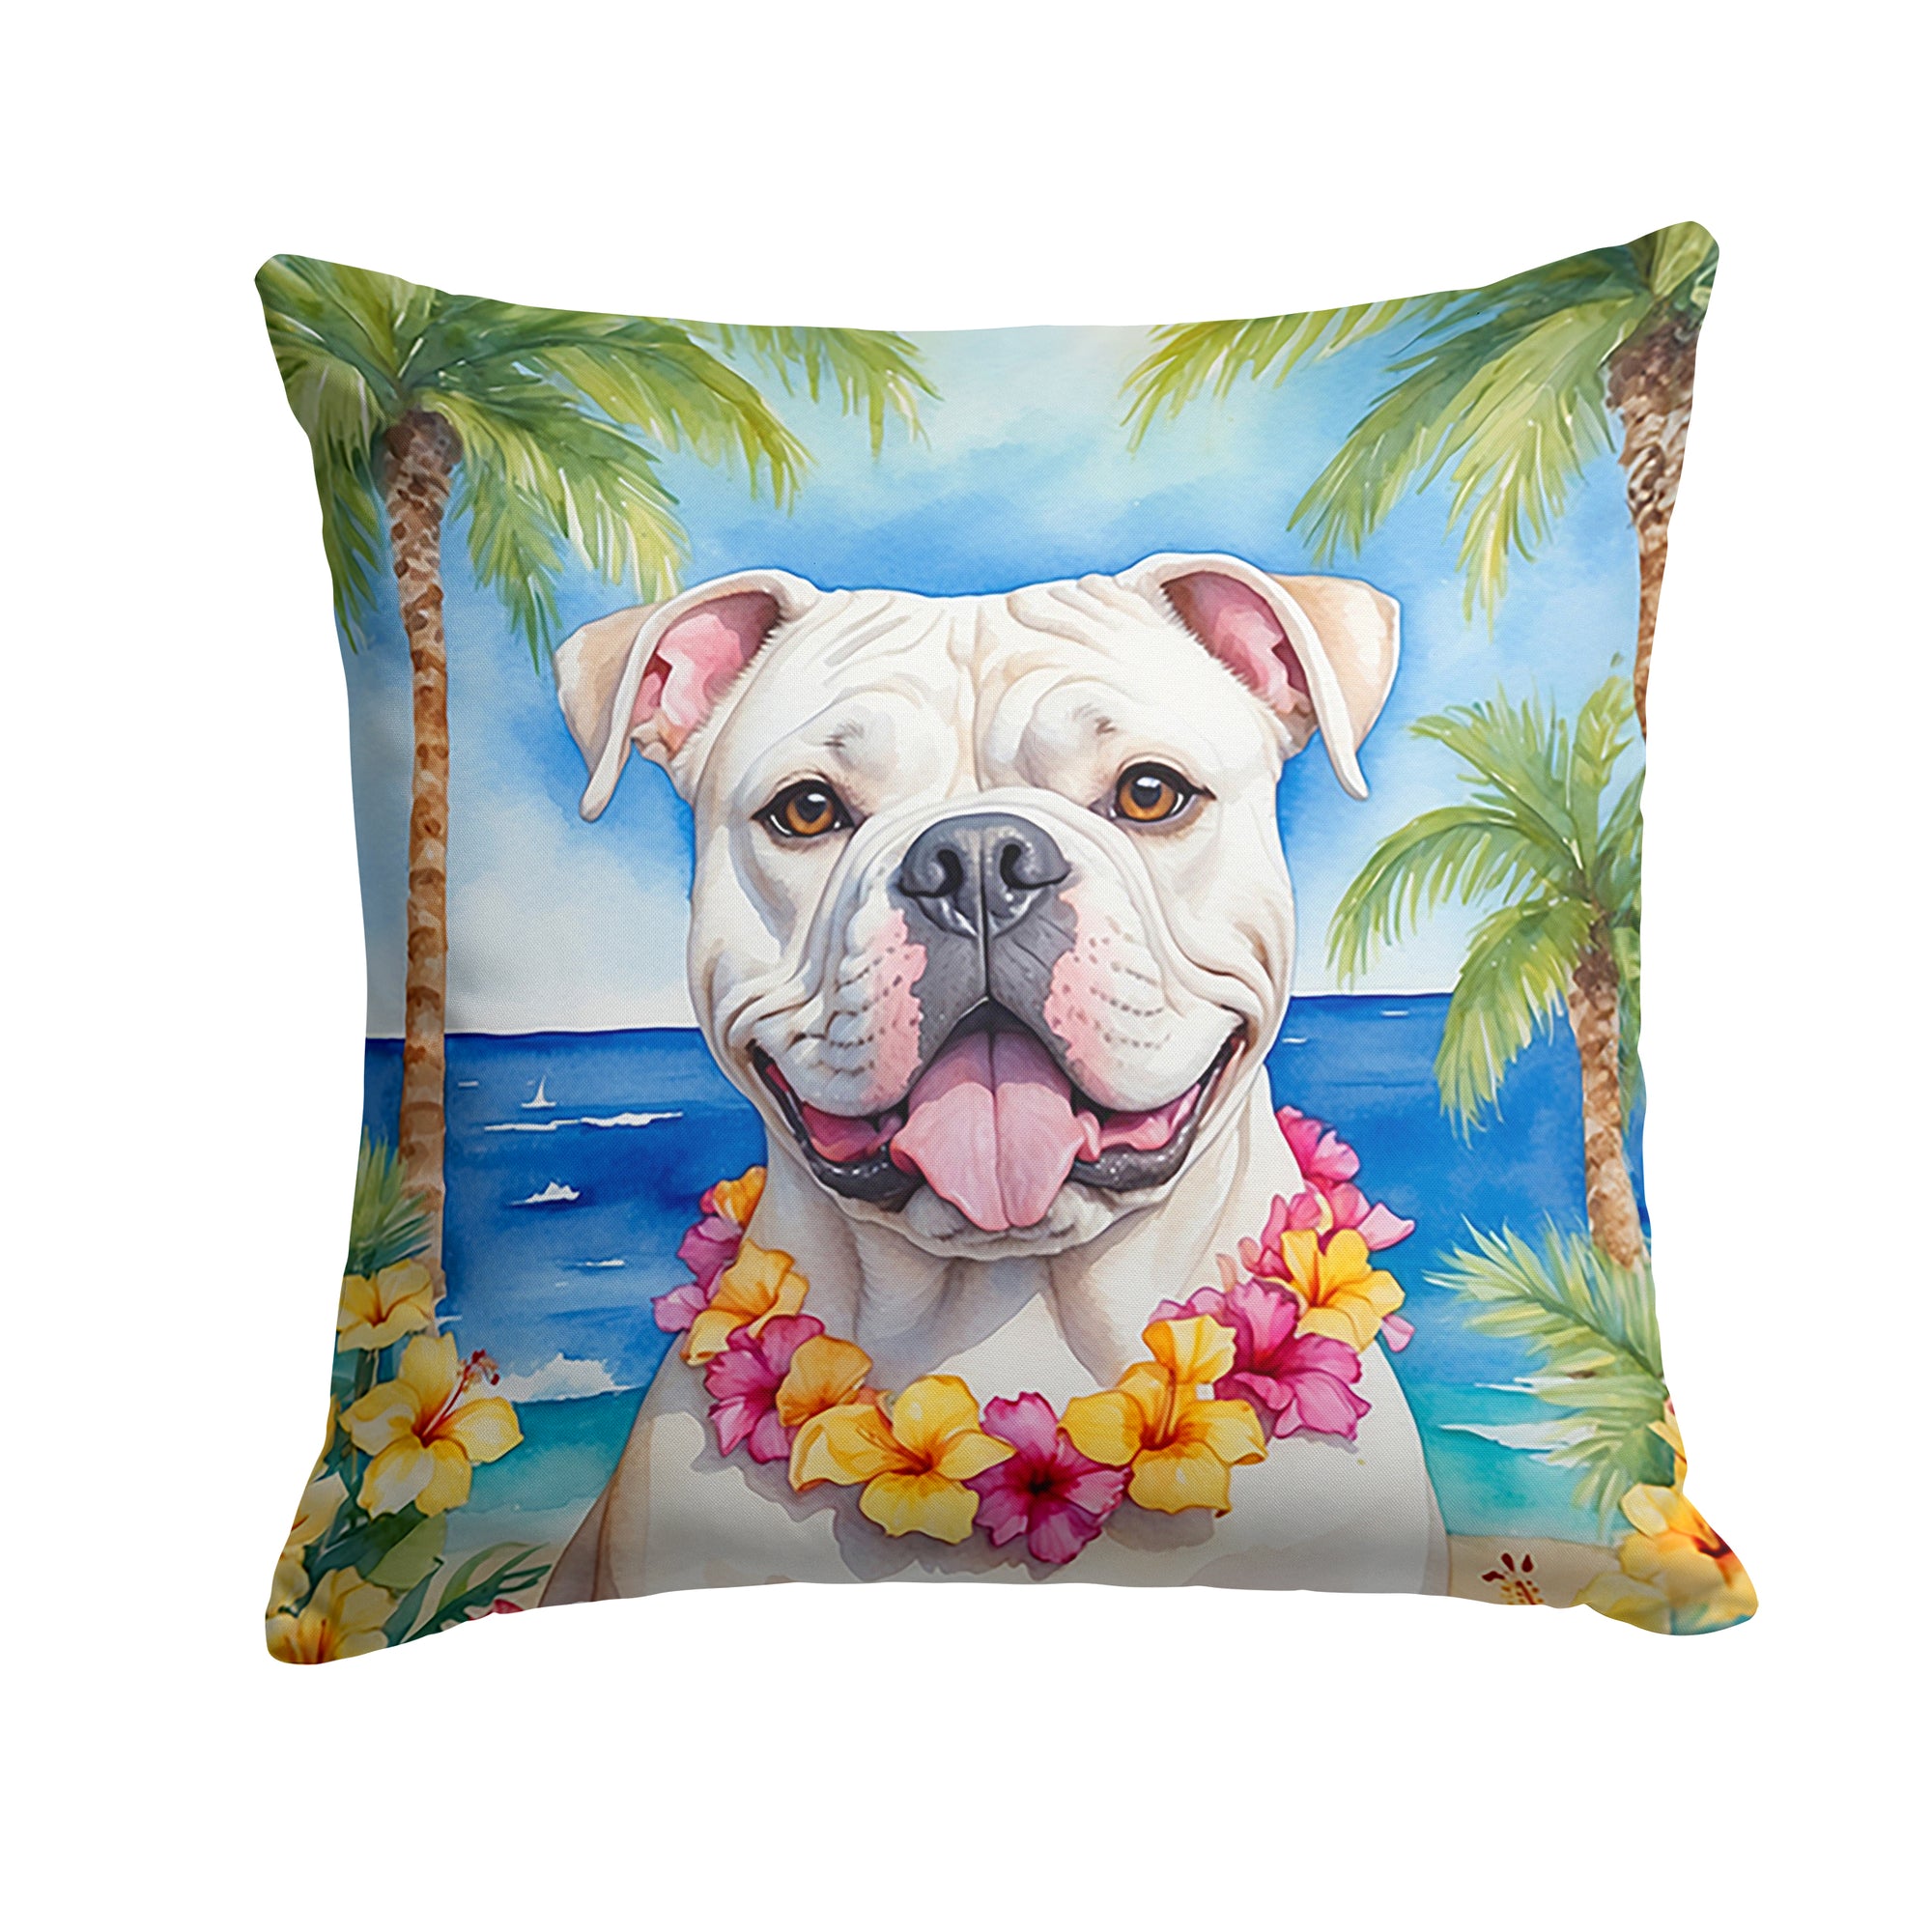 Buy this American Bulldog Luau Throw Pillow